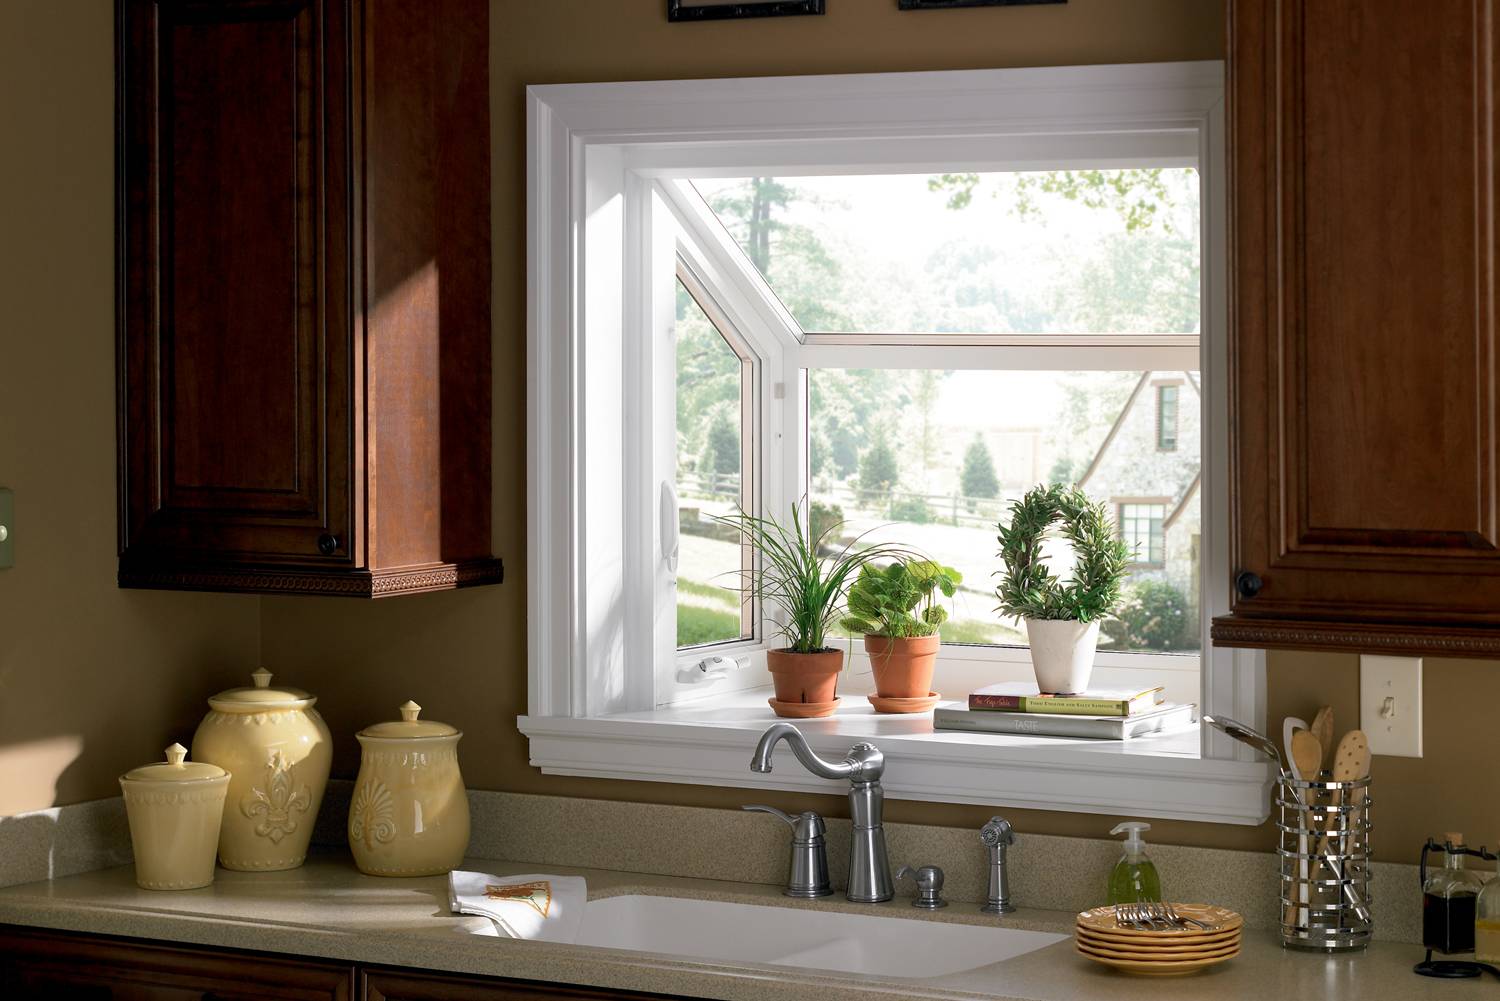 The Greenhouse Windows Kitchen Design